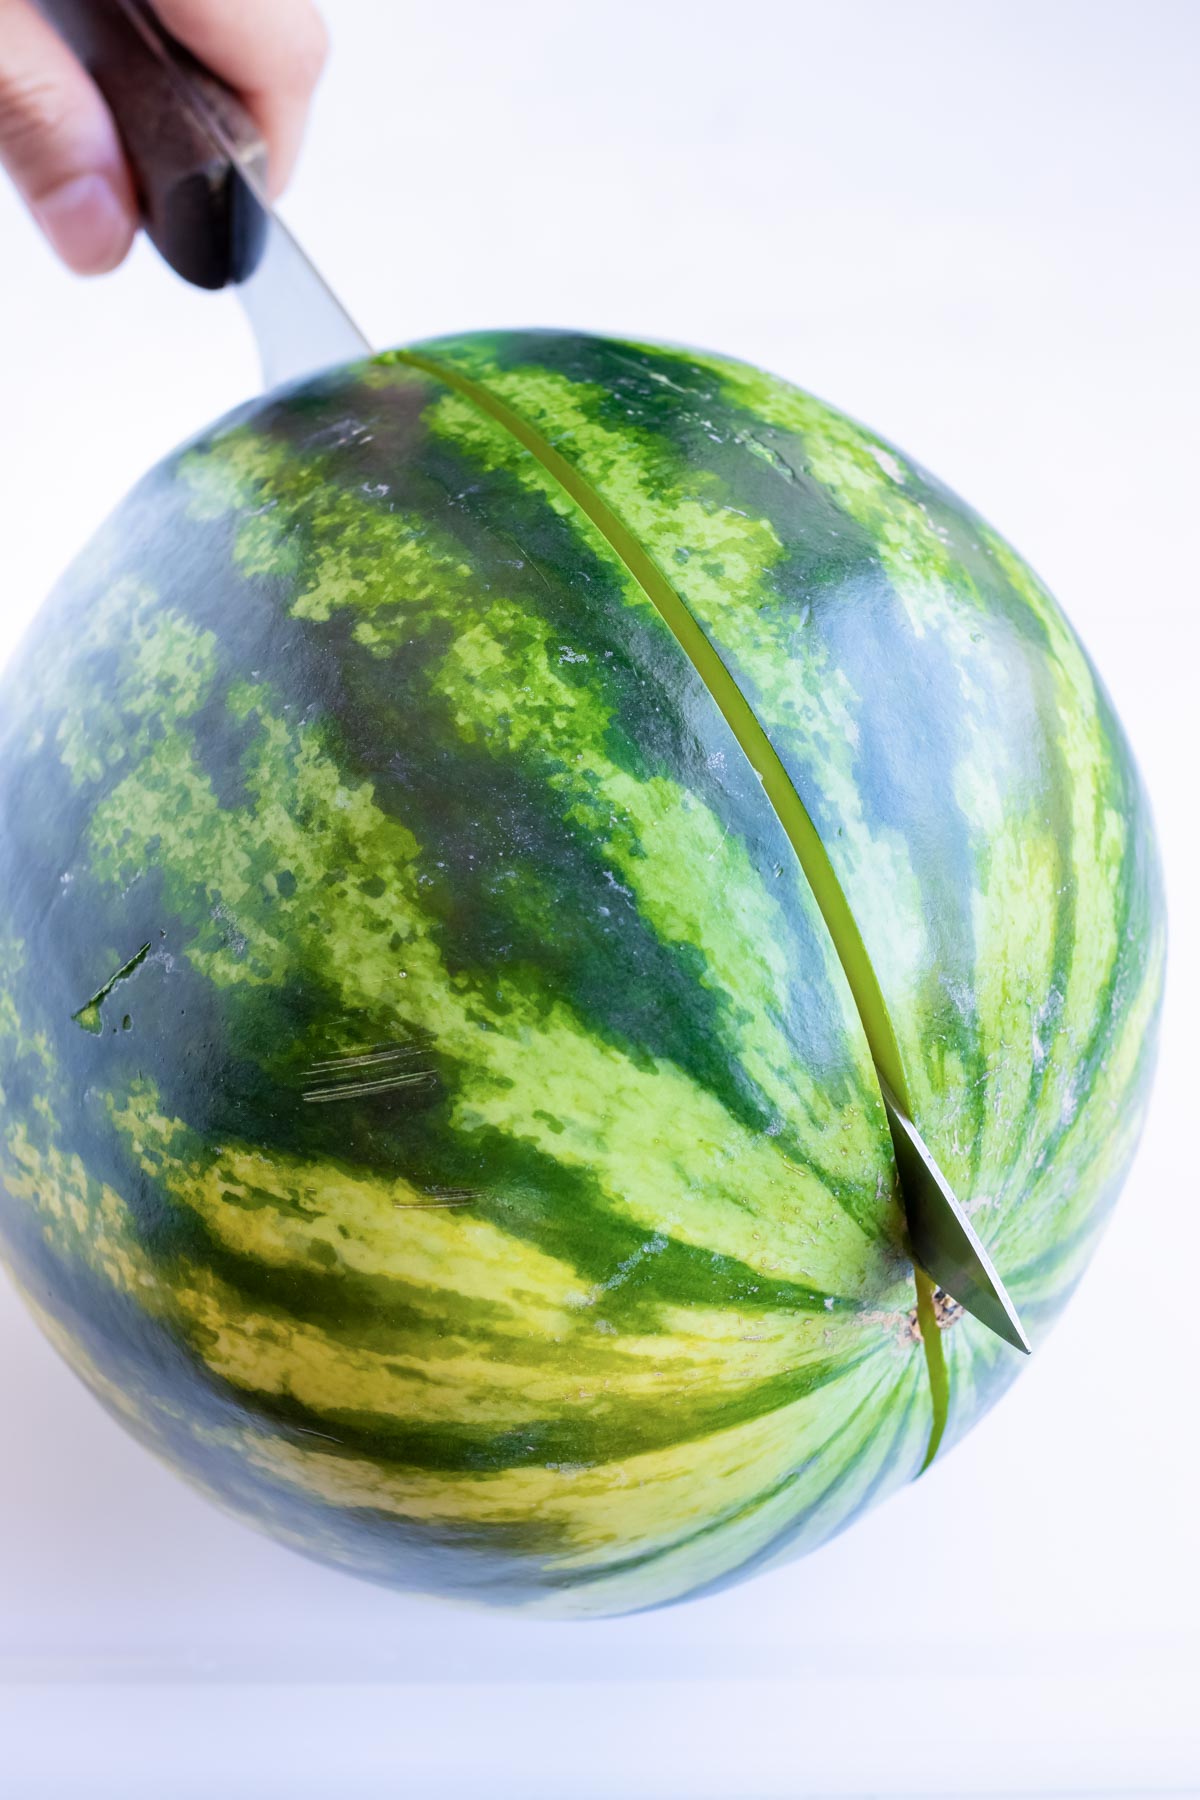 Slicing a watermelon in half